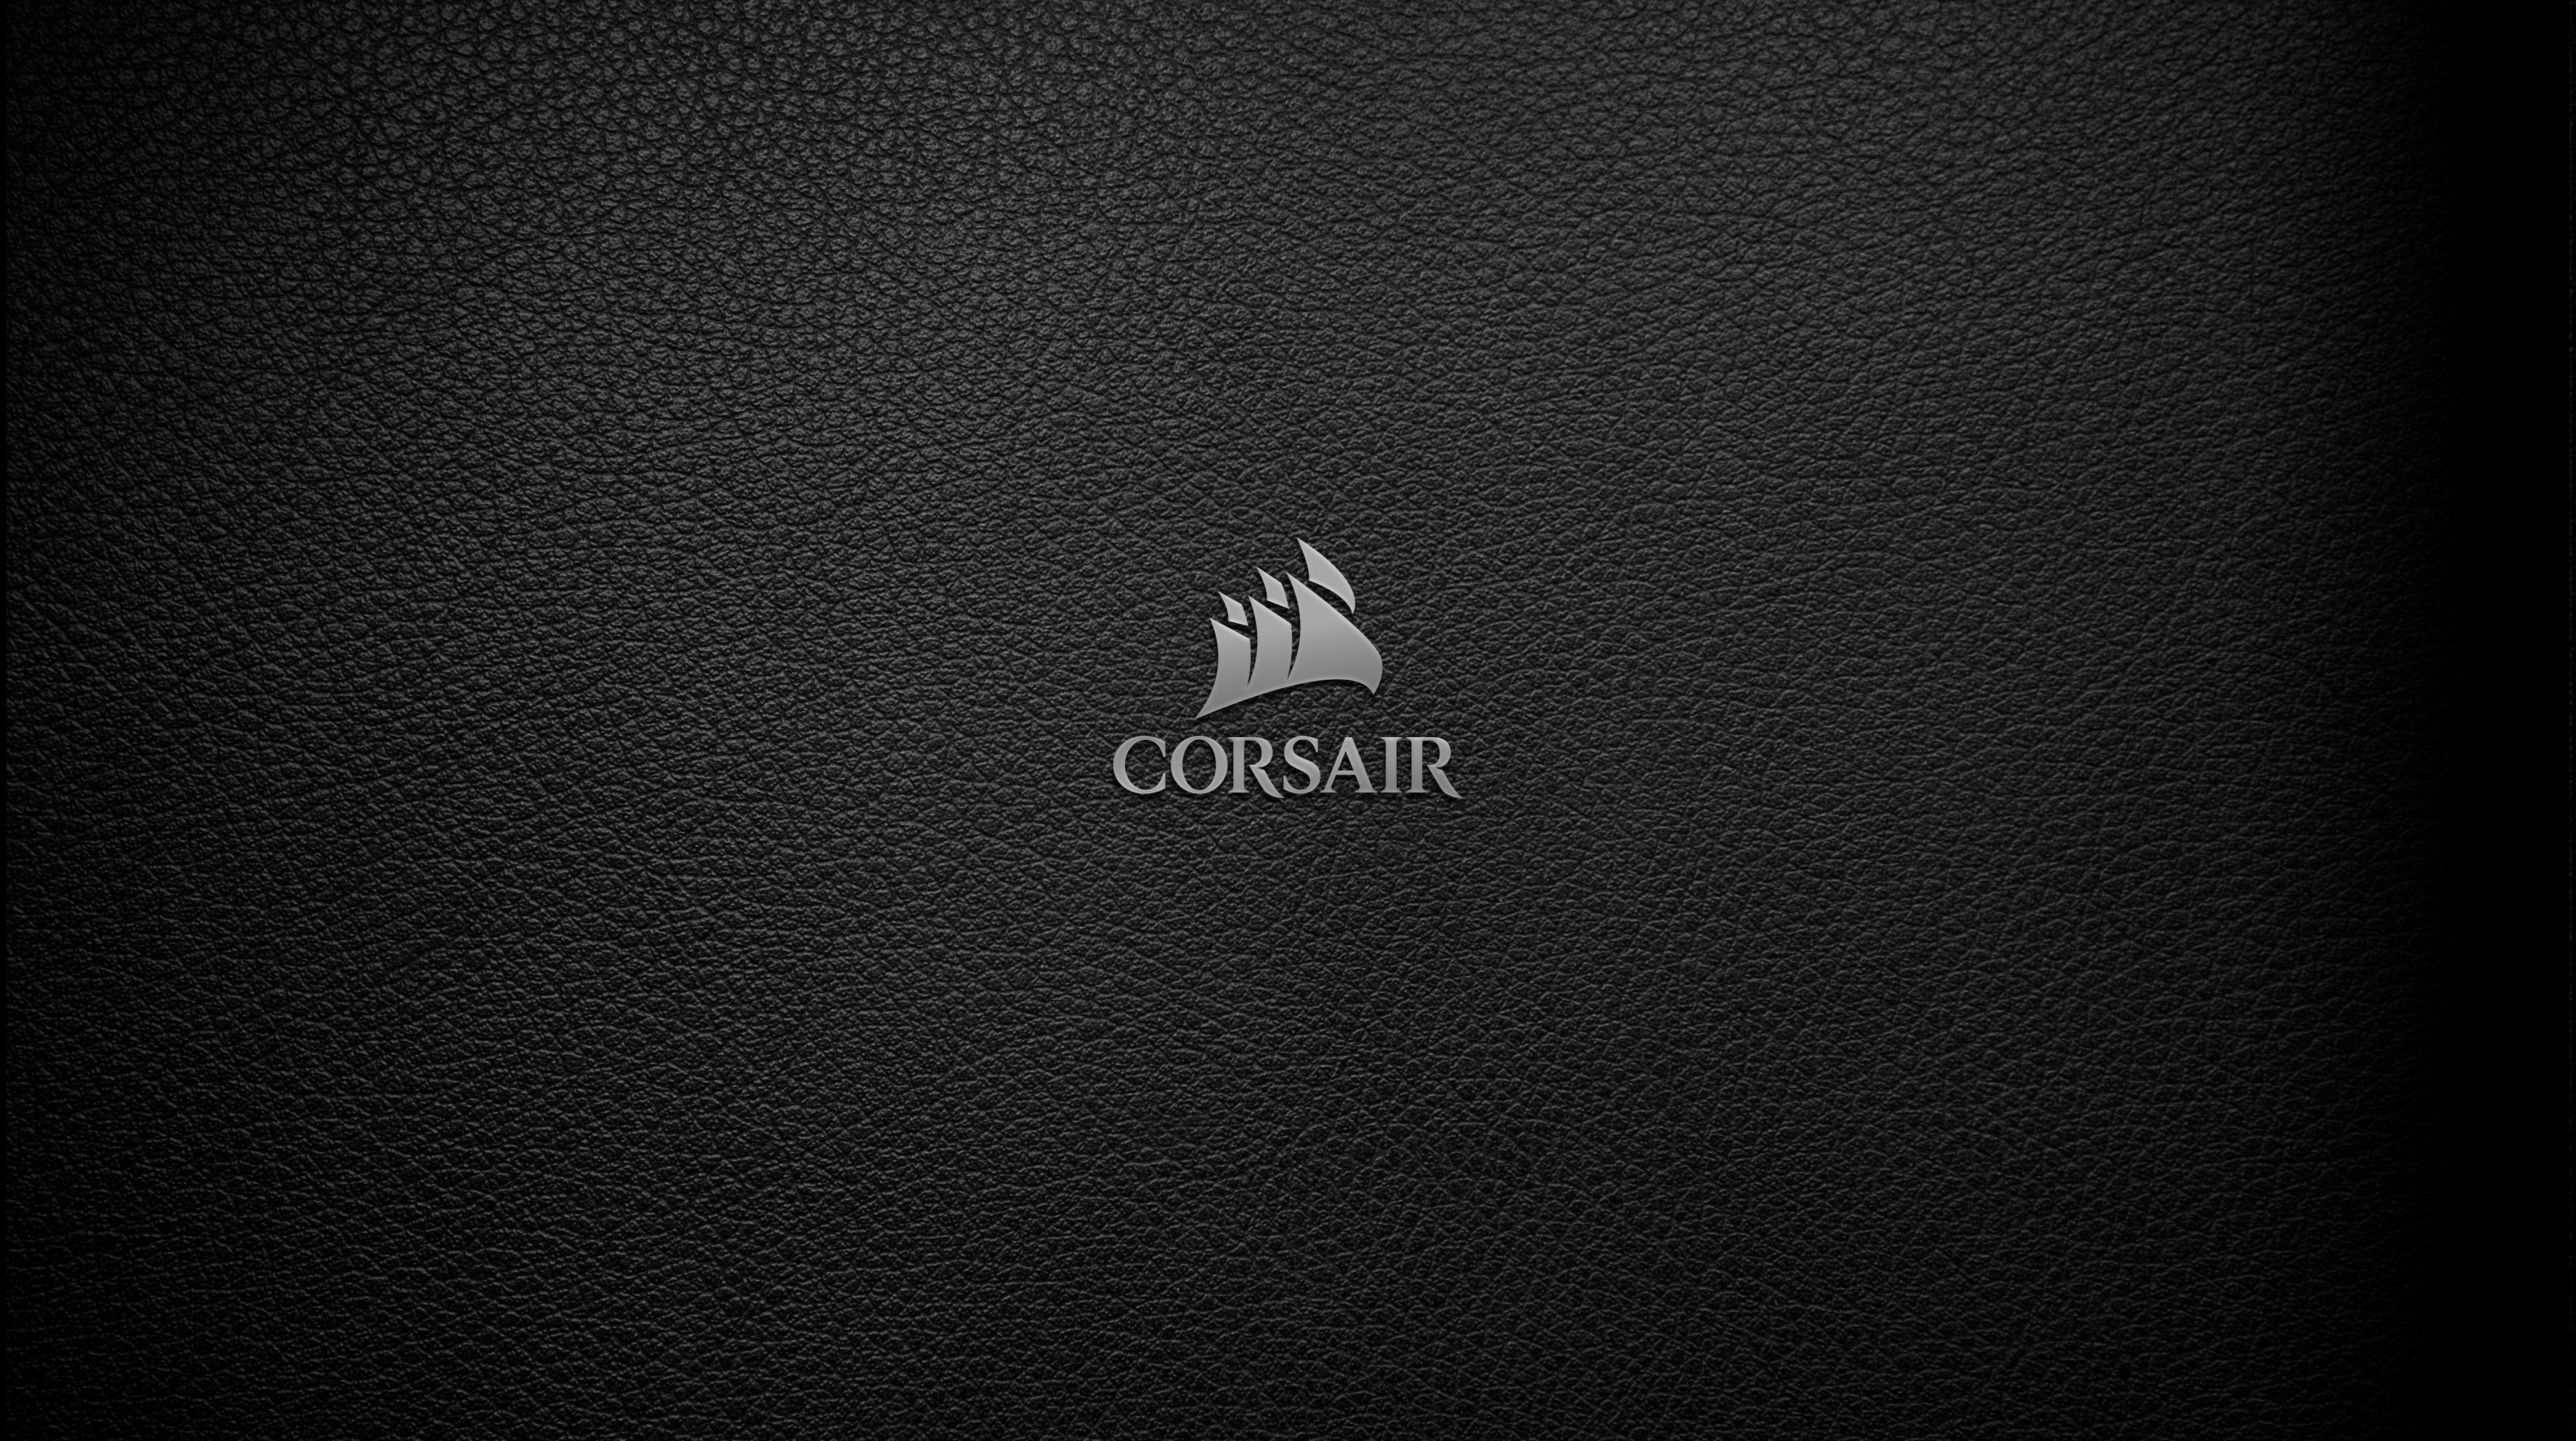 Corsair Gaming Logo Wallpaper